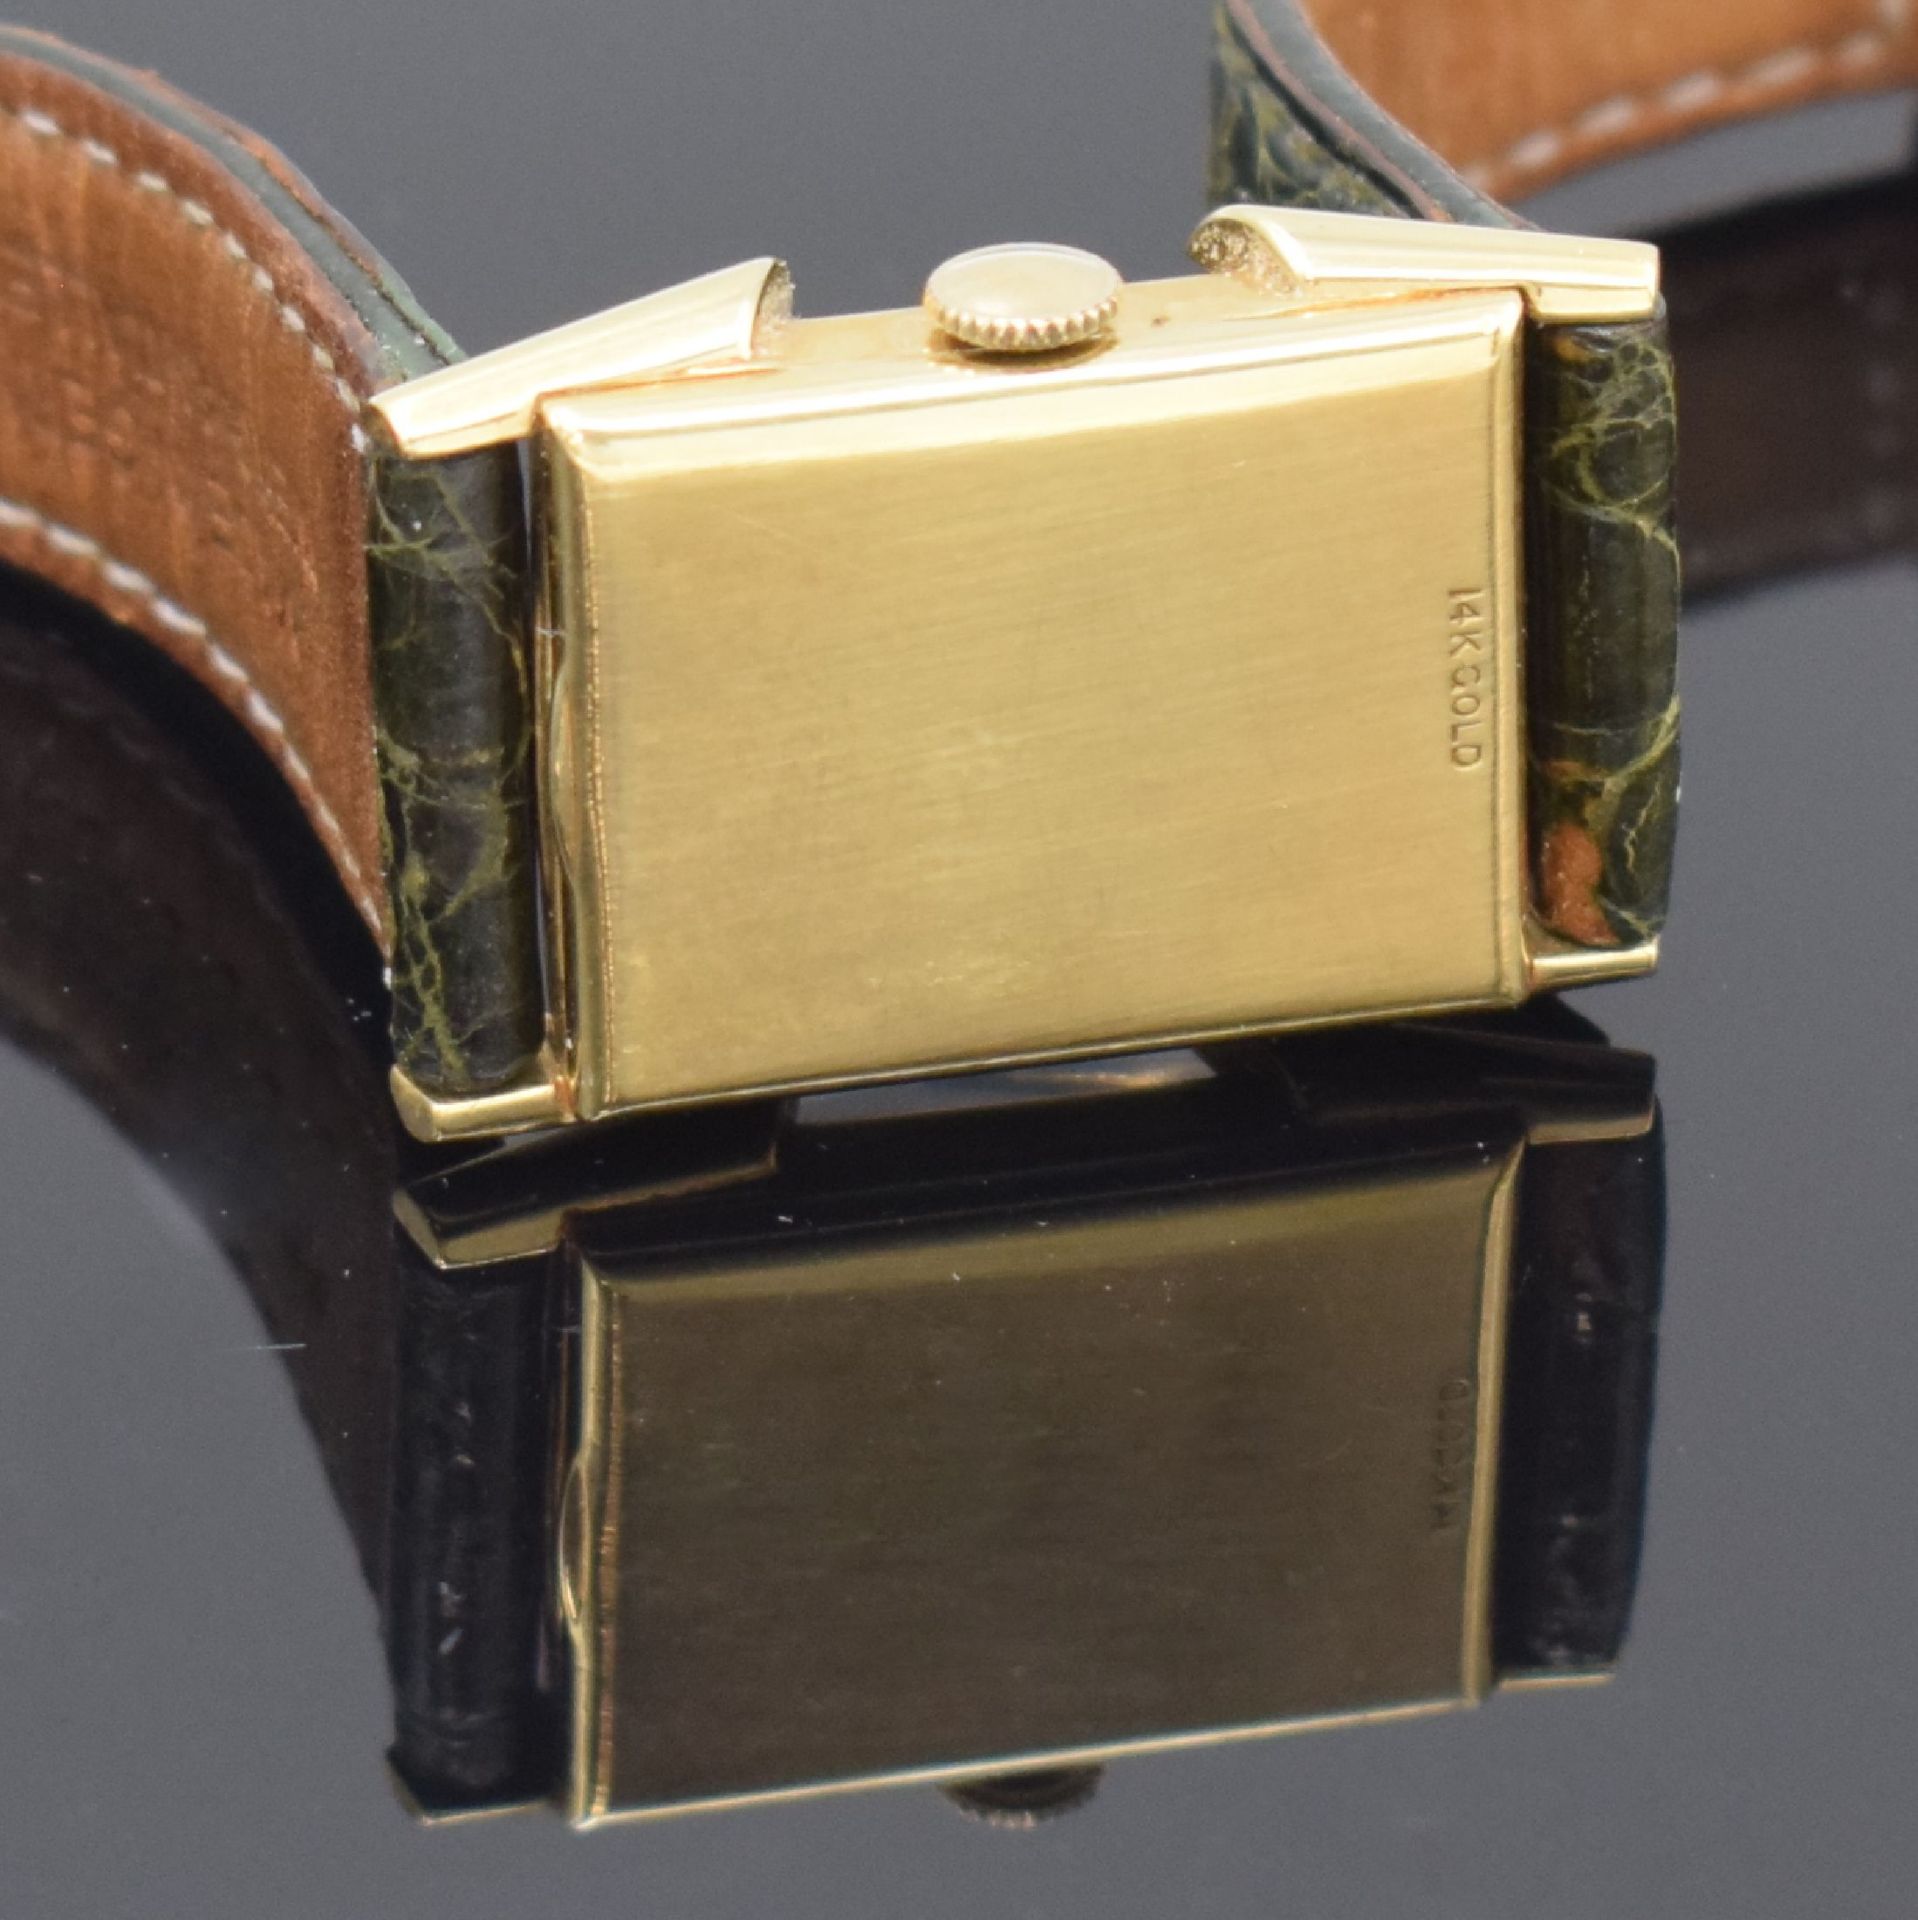 LeCoultre Armbanduhr in GG 585/000, Schweiz/USA Ende - Image 5 of 8